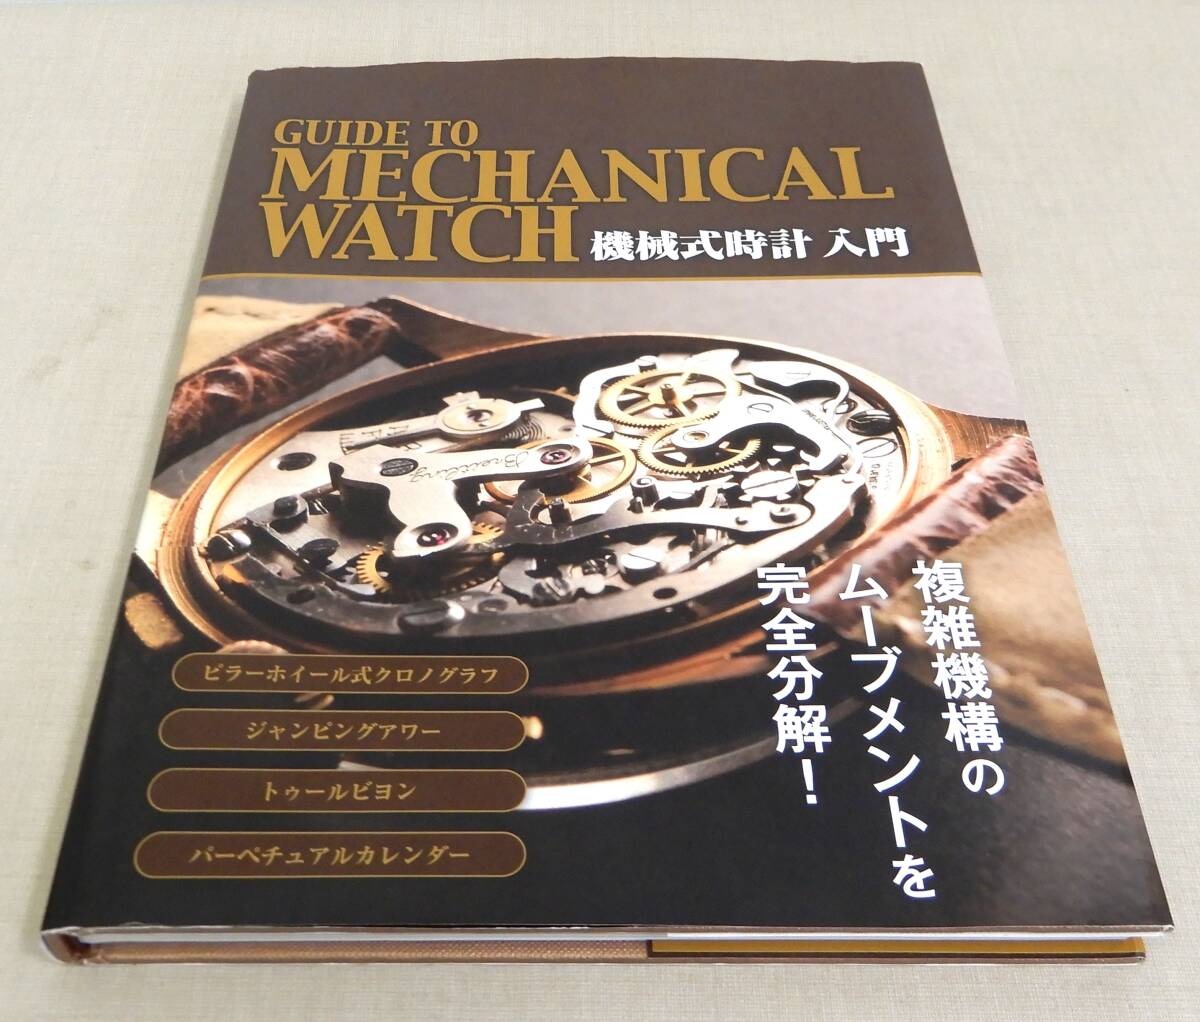 KB59/GUIDE TO MECHANICAI WATCH machine clock introduction /STUDIO TAC CREATIVE/ Studio tuck klieitib